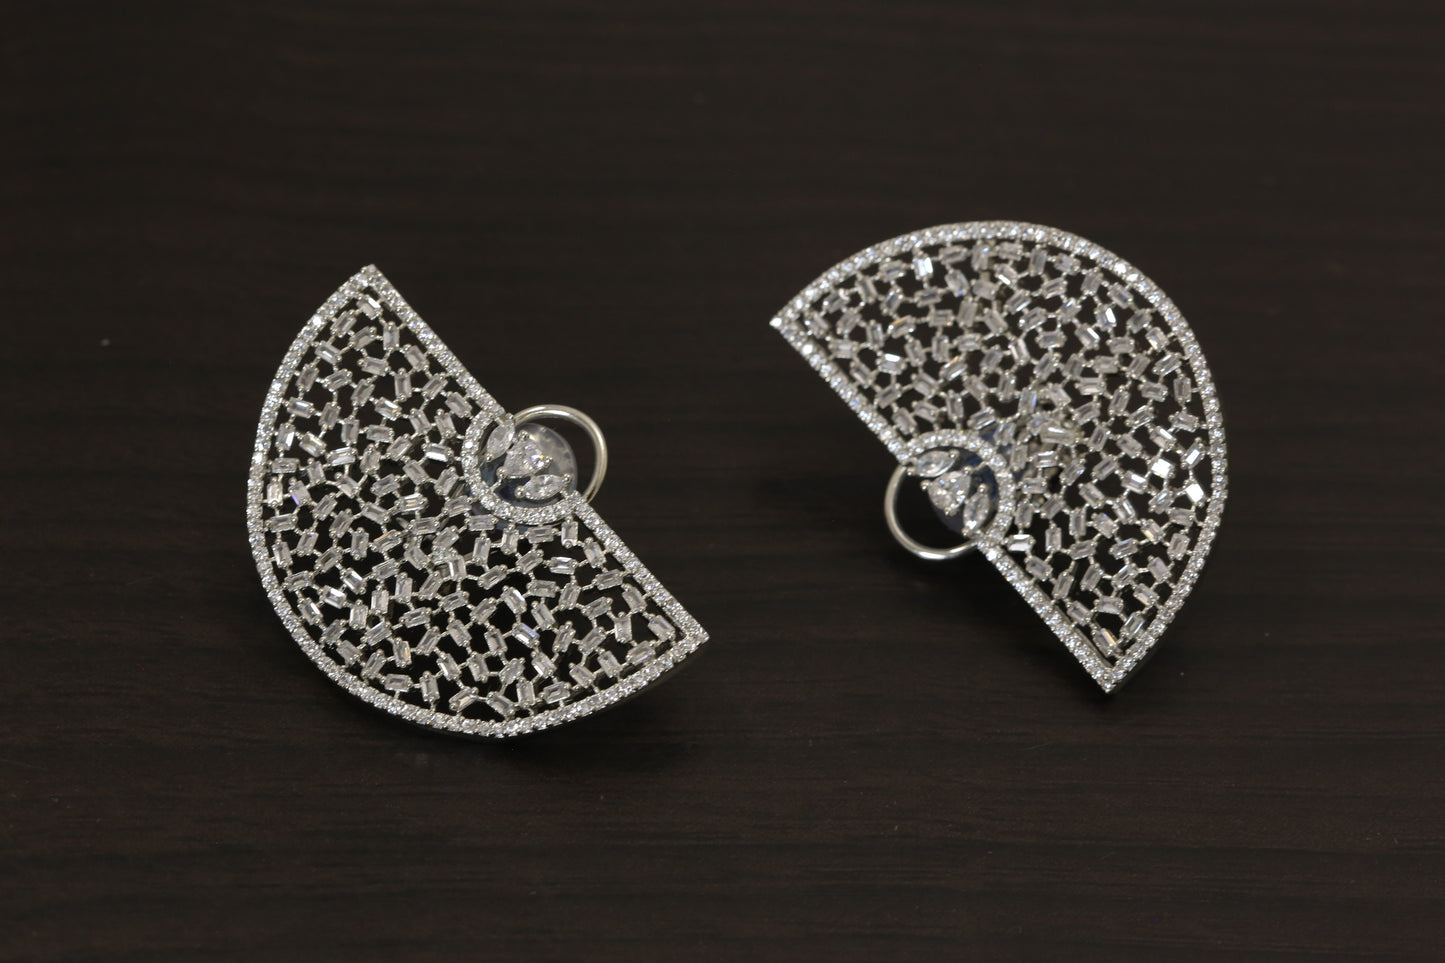 Suhasini Chand CZ Earrings - Silver